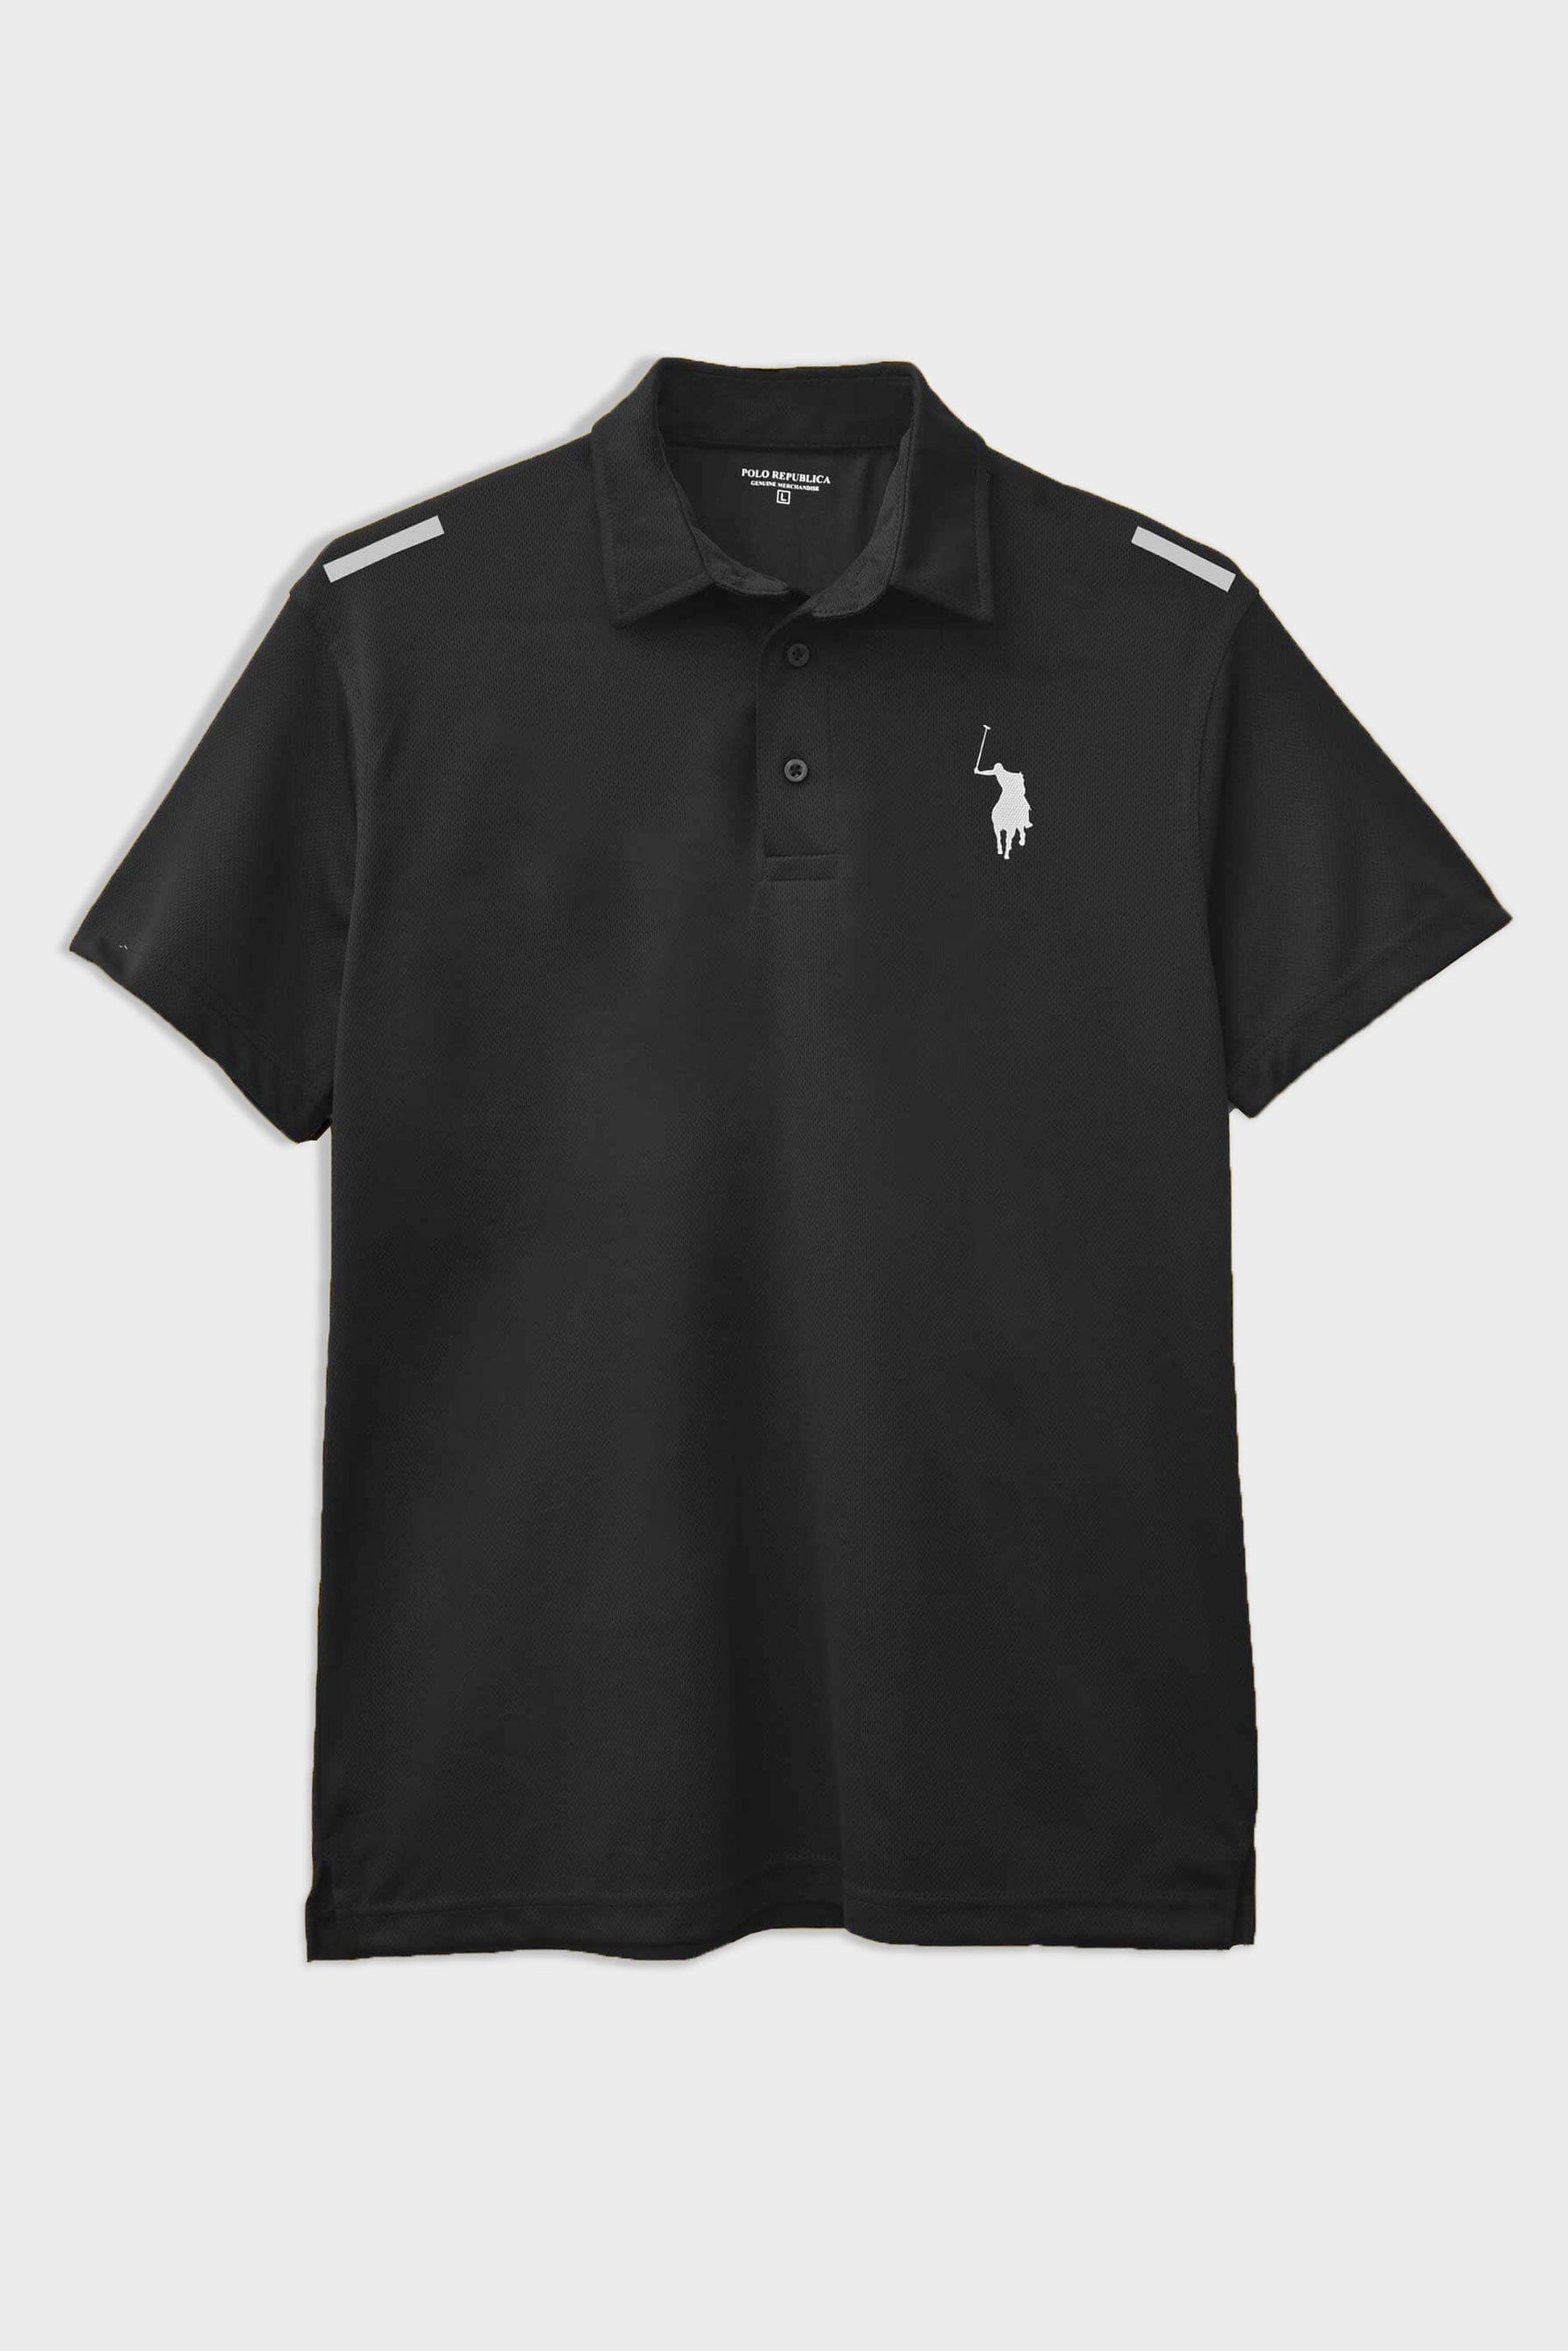 Polo Republica Men's Activewear Pony & Shoulder Double Stripes Printed Polo Shirt